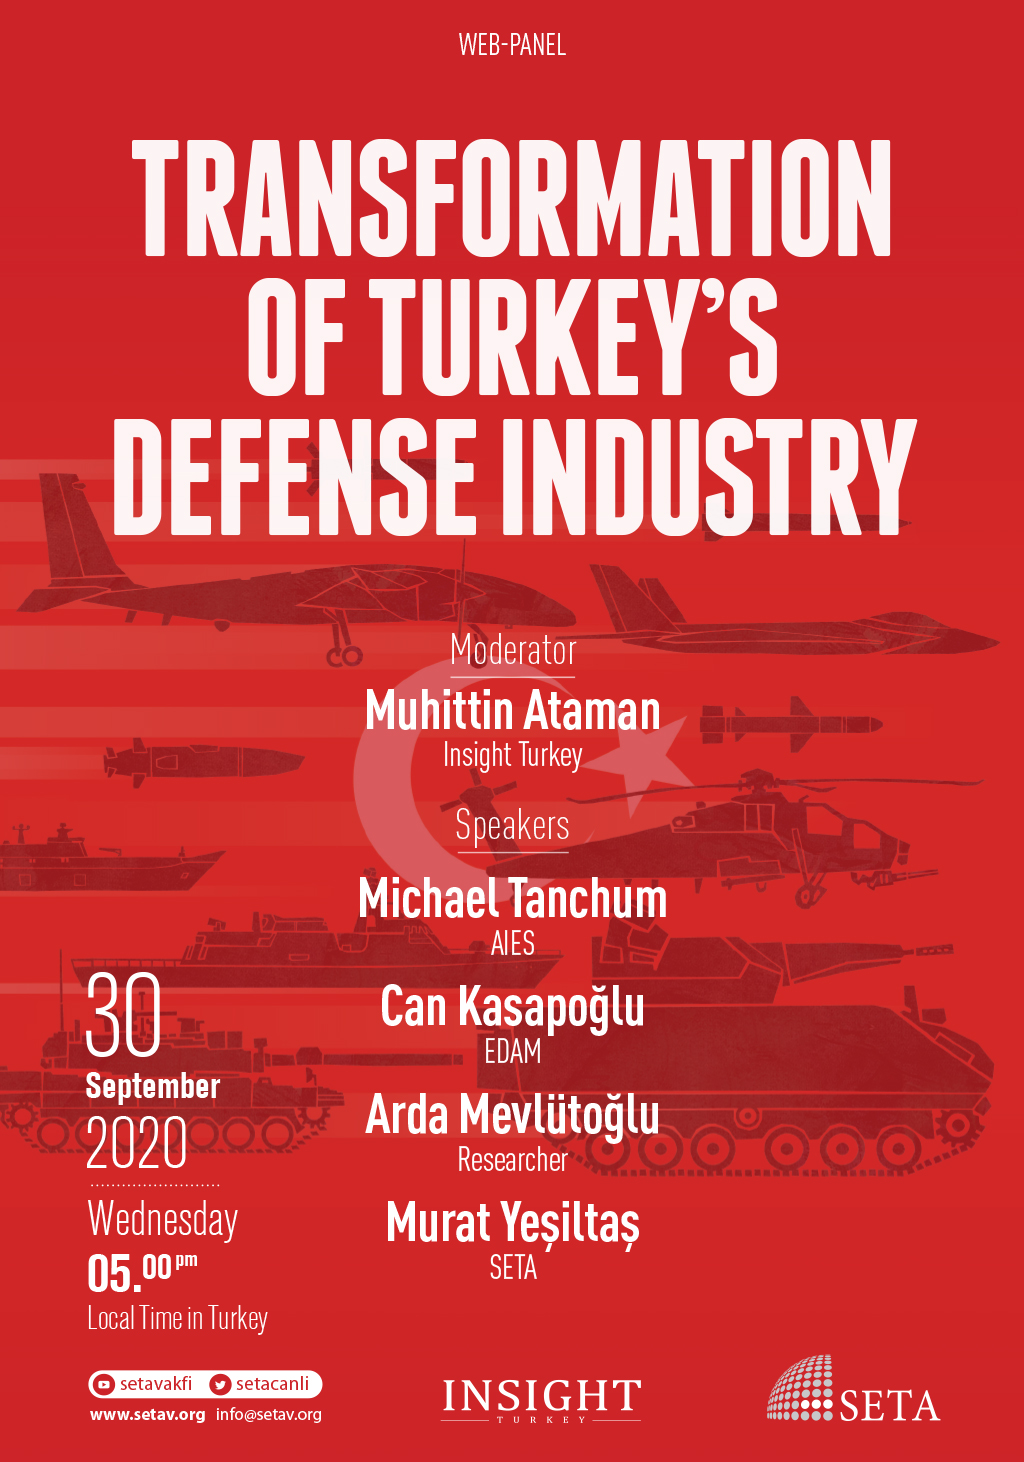 Transformation of Turkey’s Defense Industry